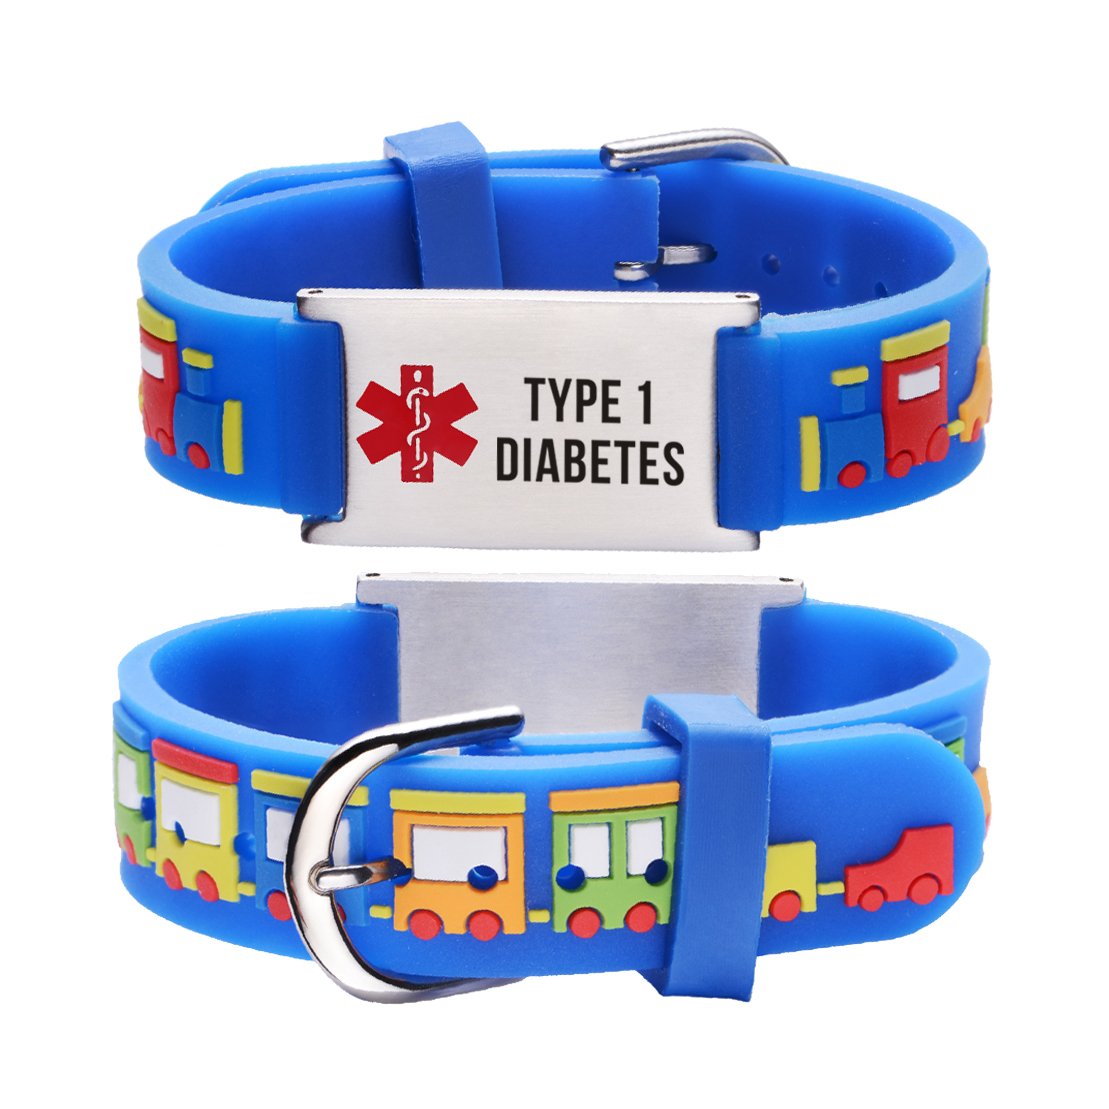 Type 1 Diabetes bracelets for kids-Small train